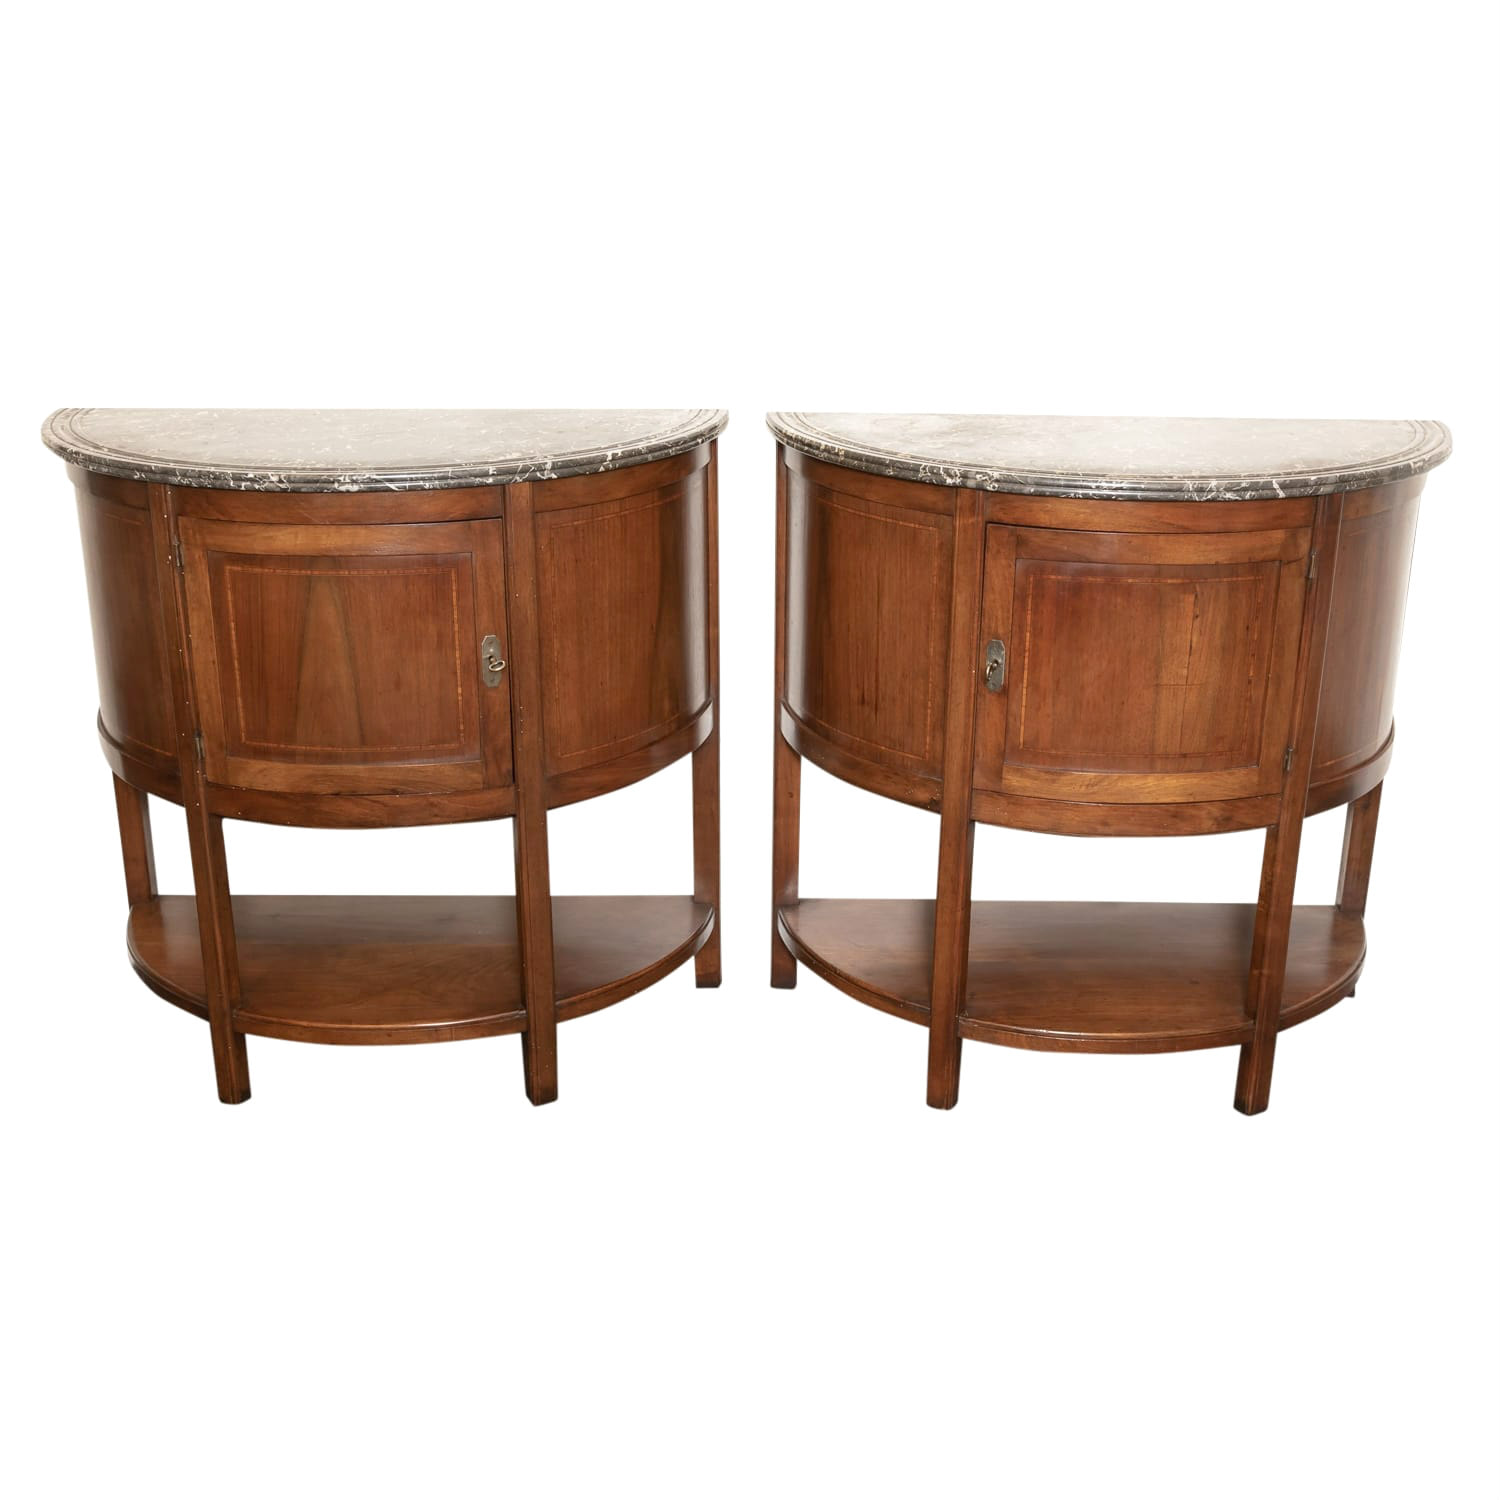 Louis Xvi Style Demilune Cabinets